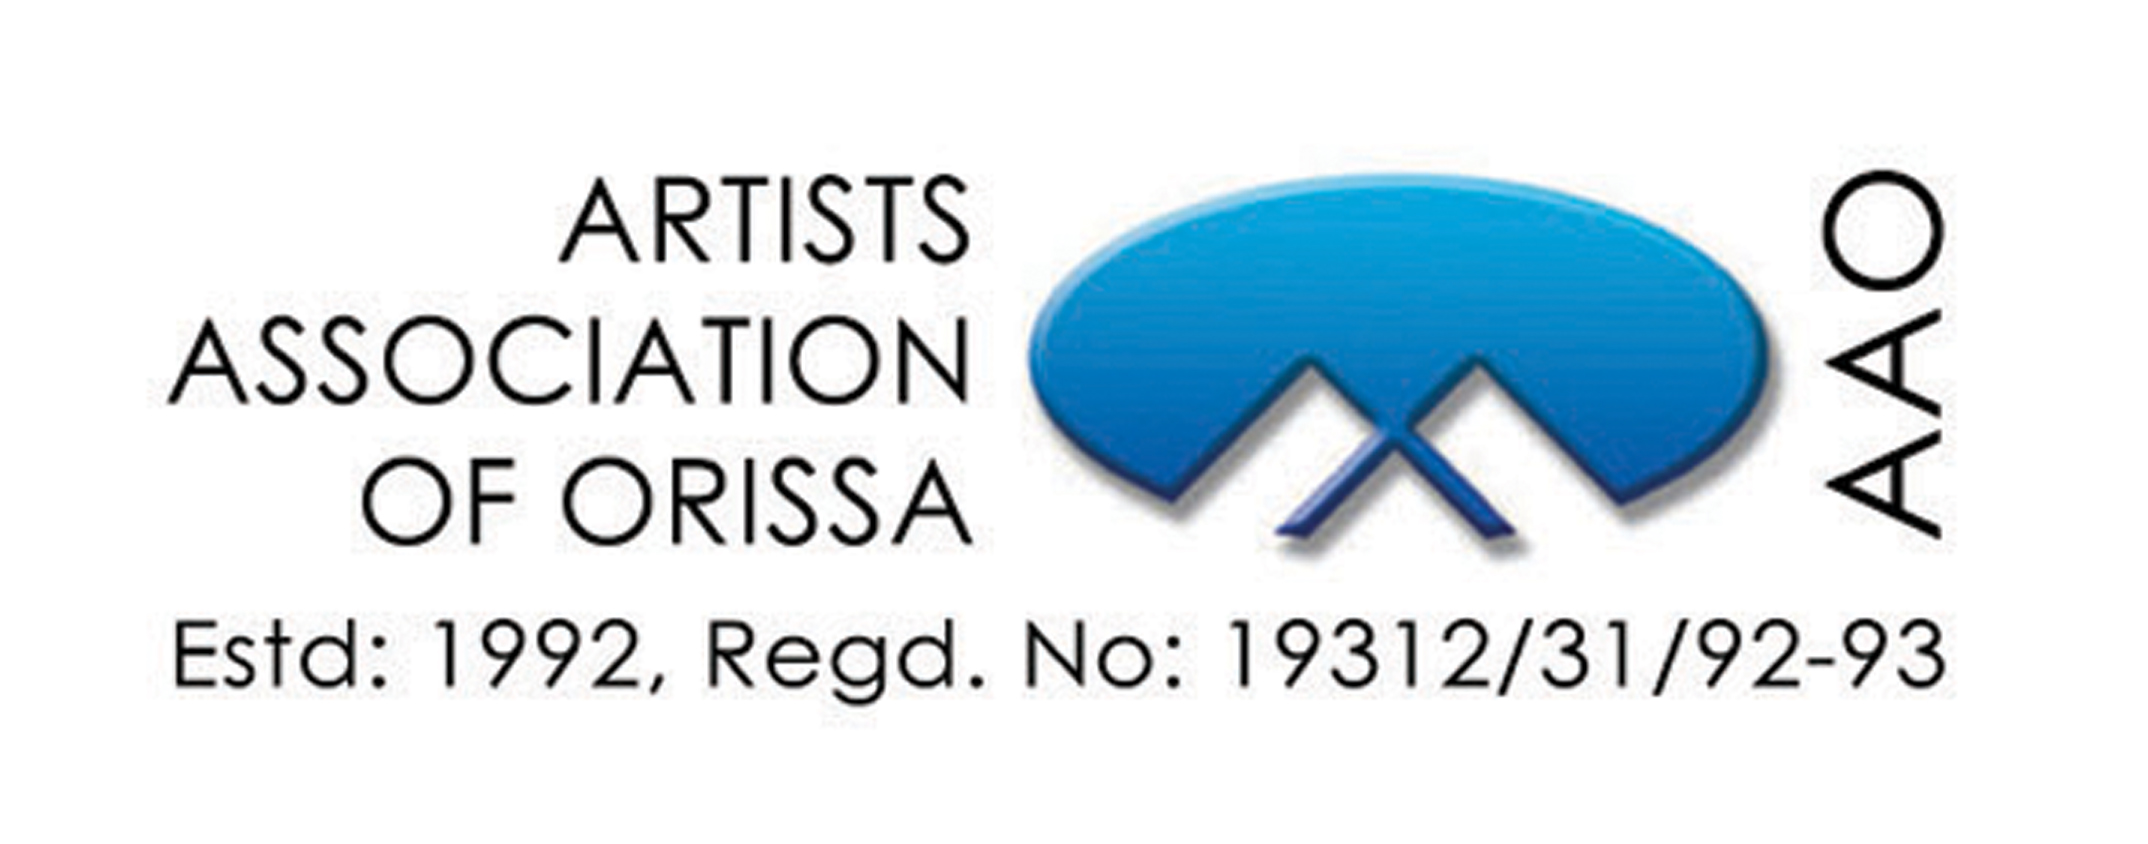 Artists Association of Orissa